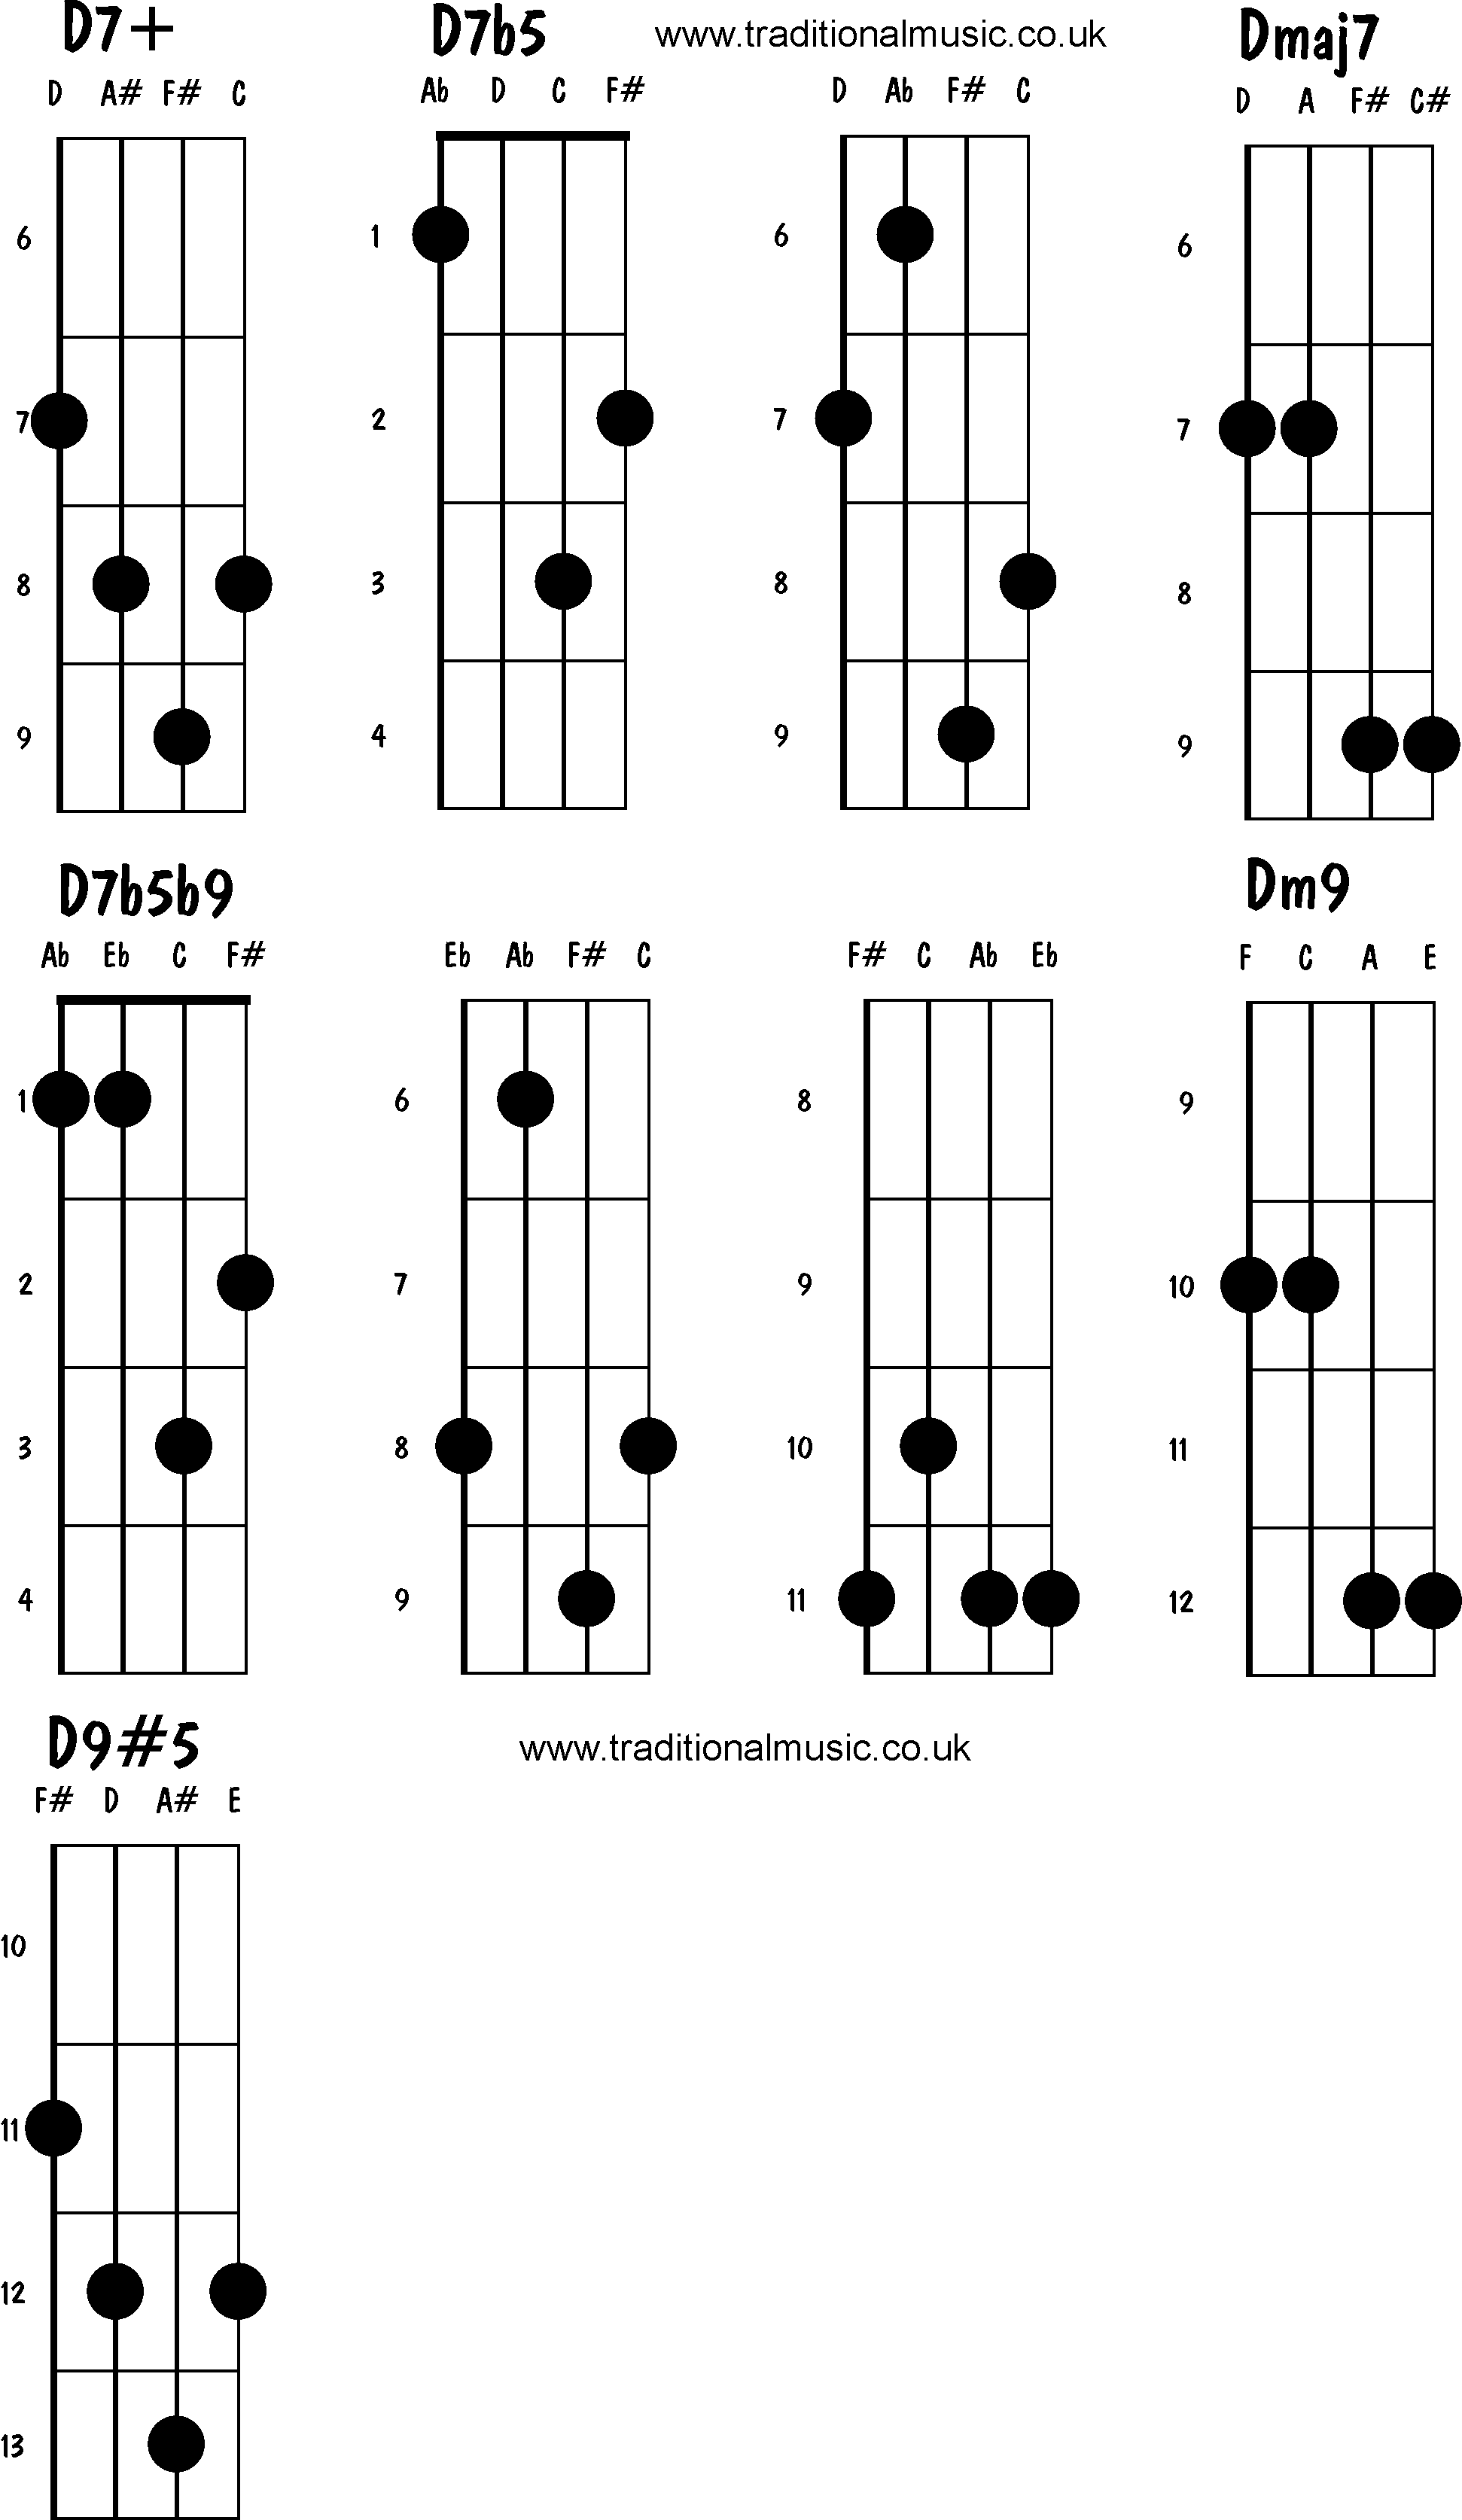 Advanced mandolin chords: D7+, D7b5, Dmaj7, D7b5b9, Dm9, D9#5